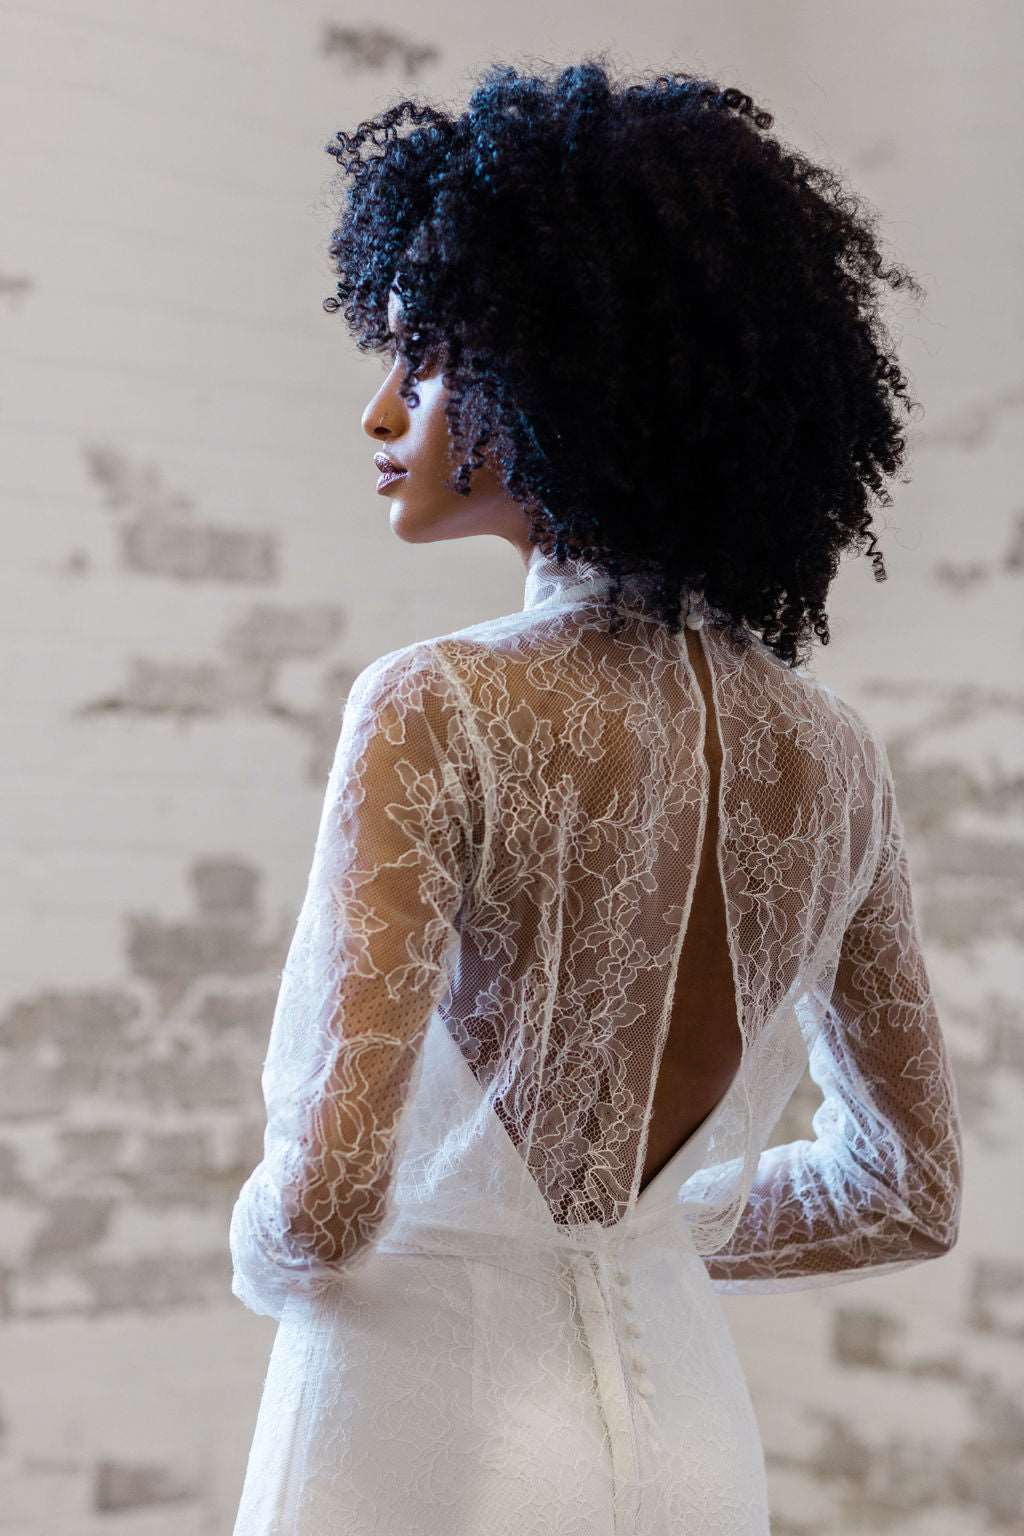 Sheer lace wedding dress overlay. Custom made in Toronto,Canada.